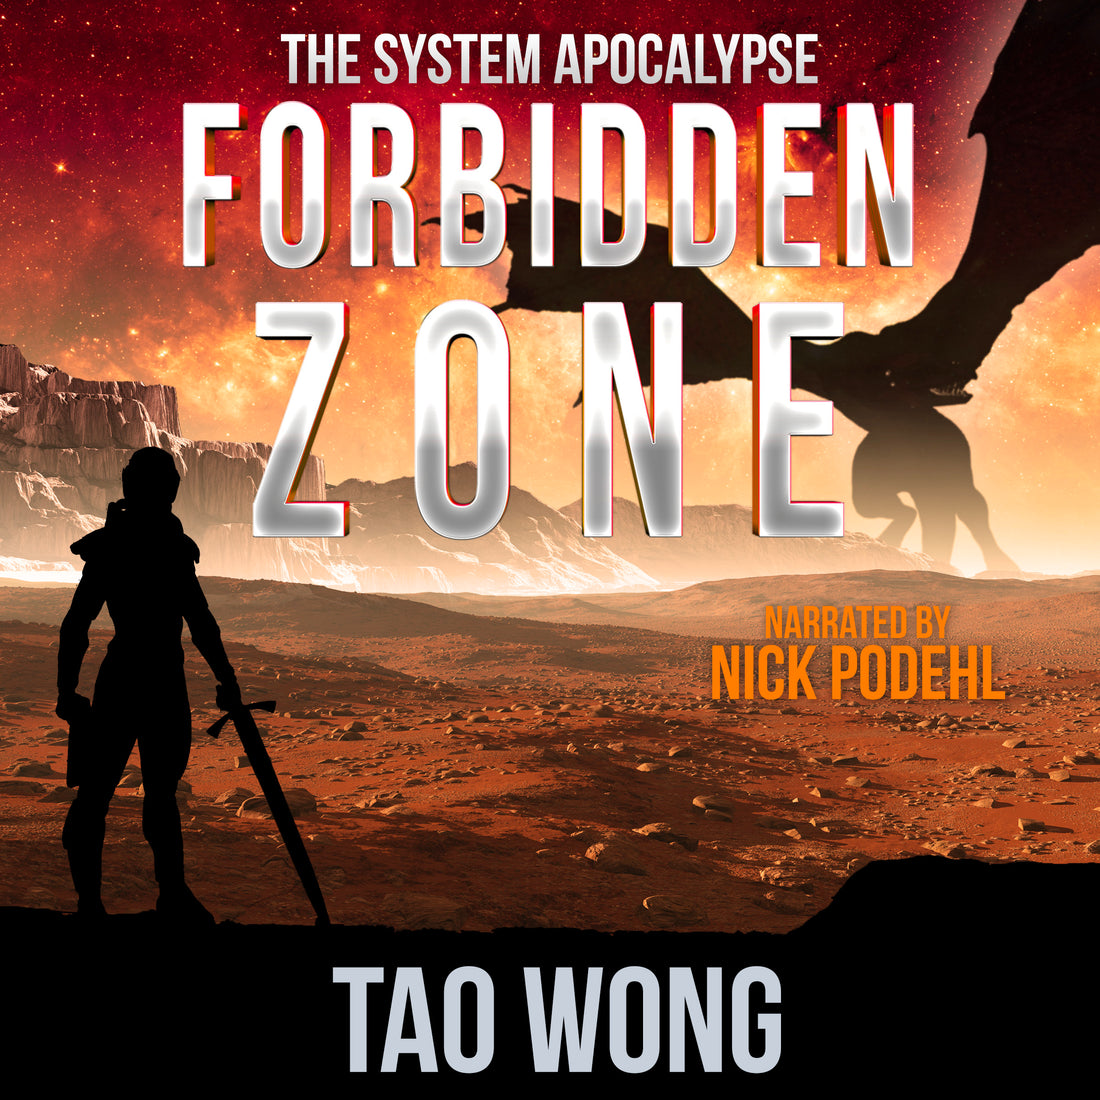 The Forbidden Zone Audiobook Is Here!